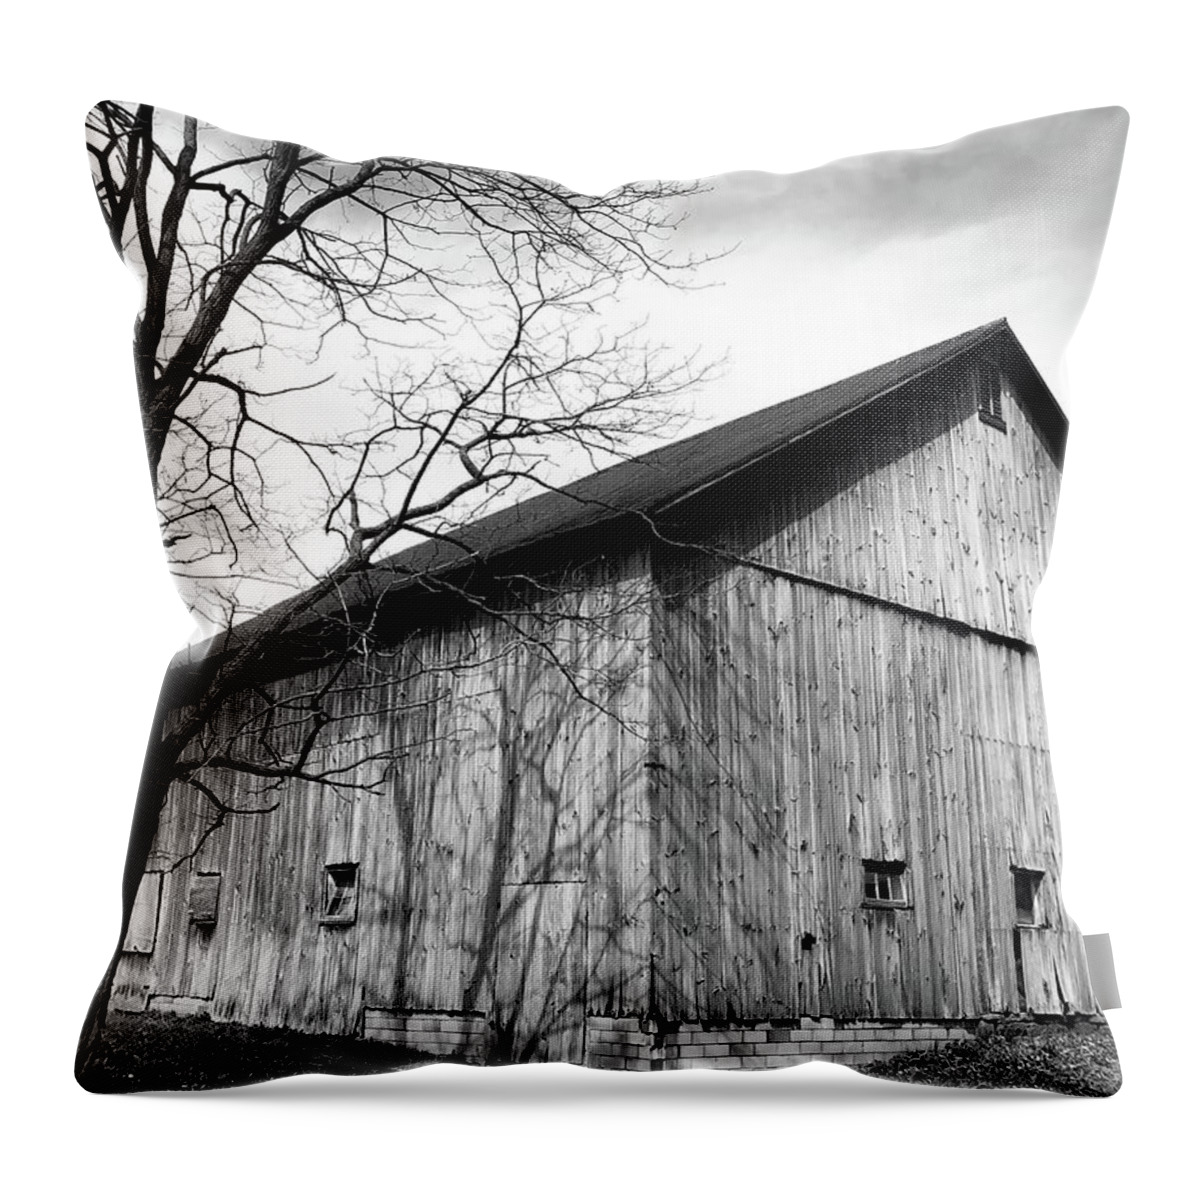 Ohio Barn Throw Pillow featuring the photograph Ohio Barn by Edward Smith